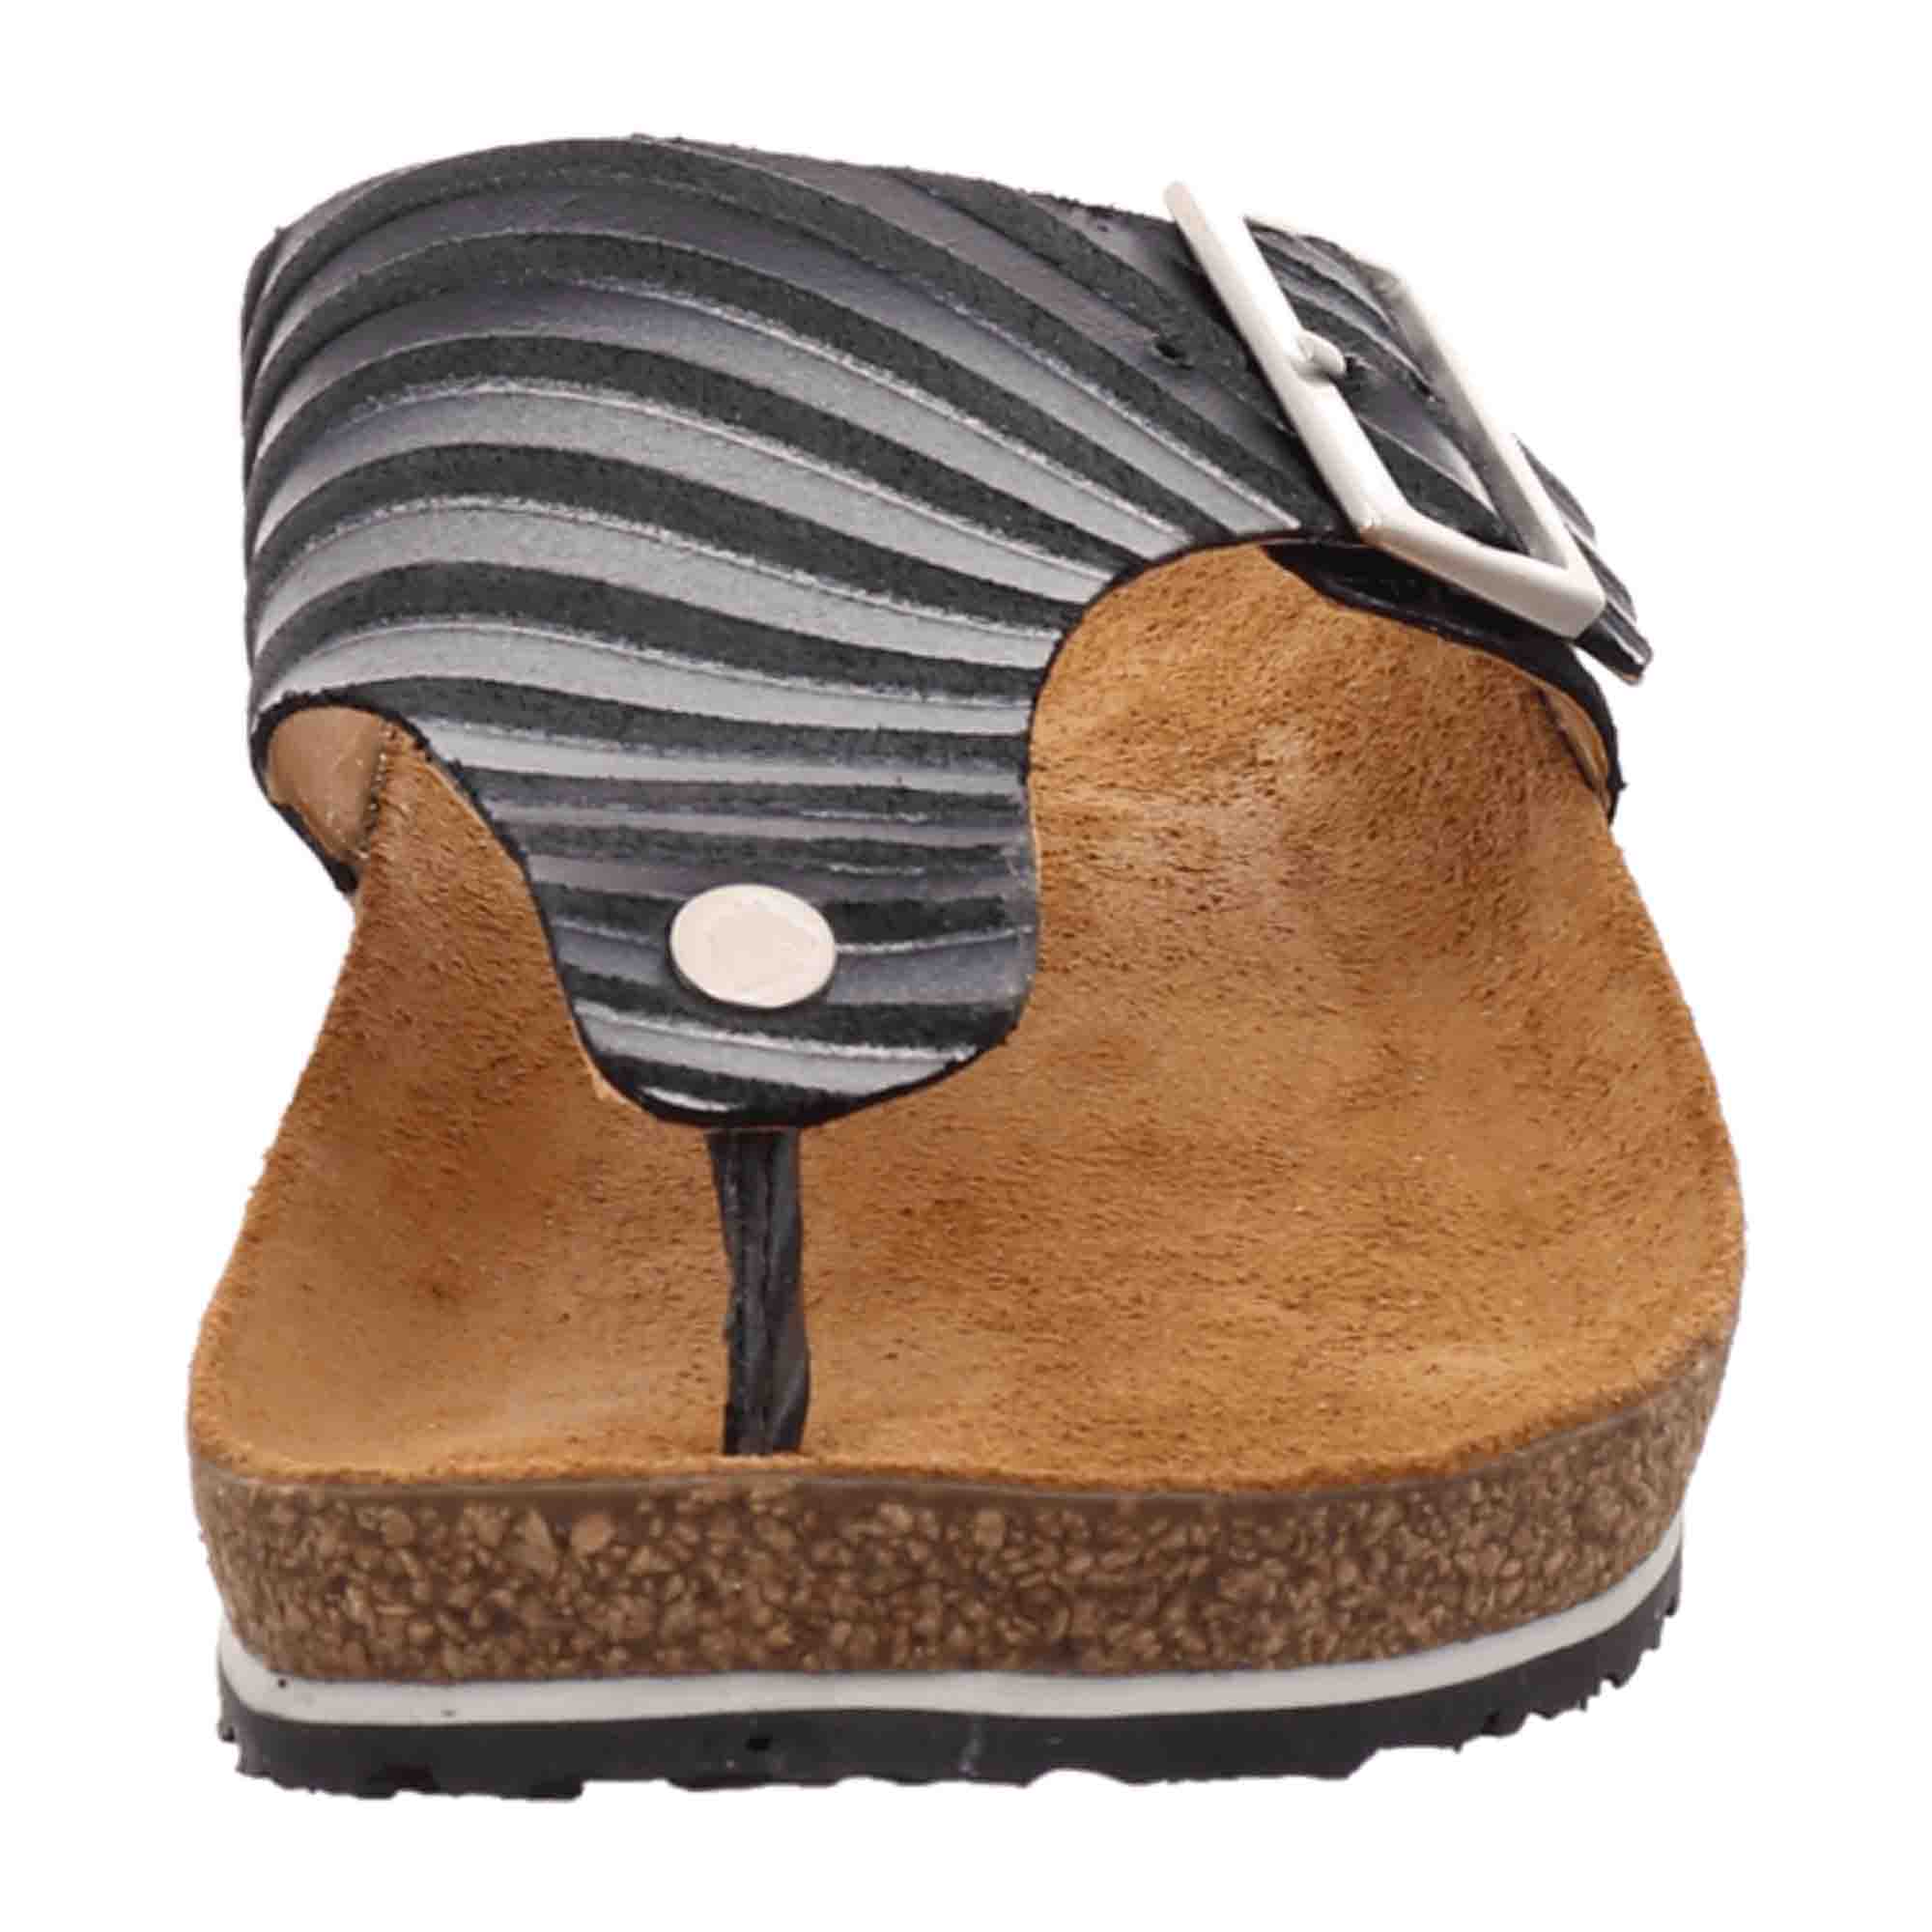 Haflinger Bio Conny Women's Sandals in Black - Eco-Friendly, Stylish & Durable